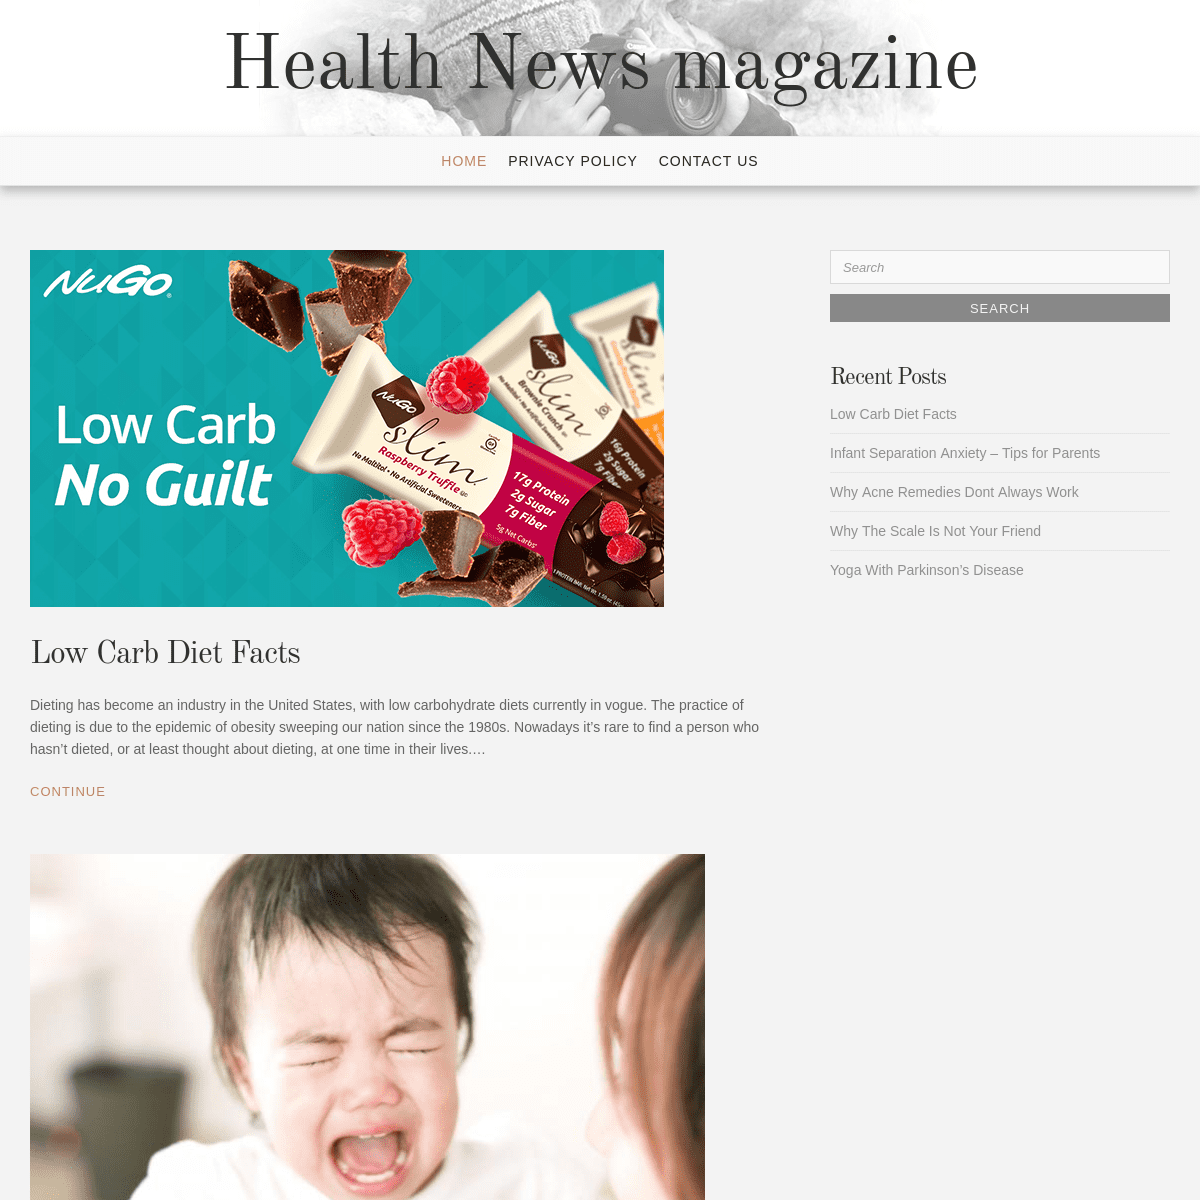 Health News magazine